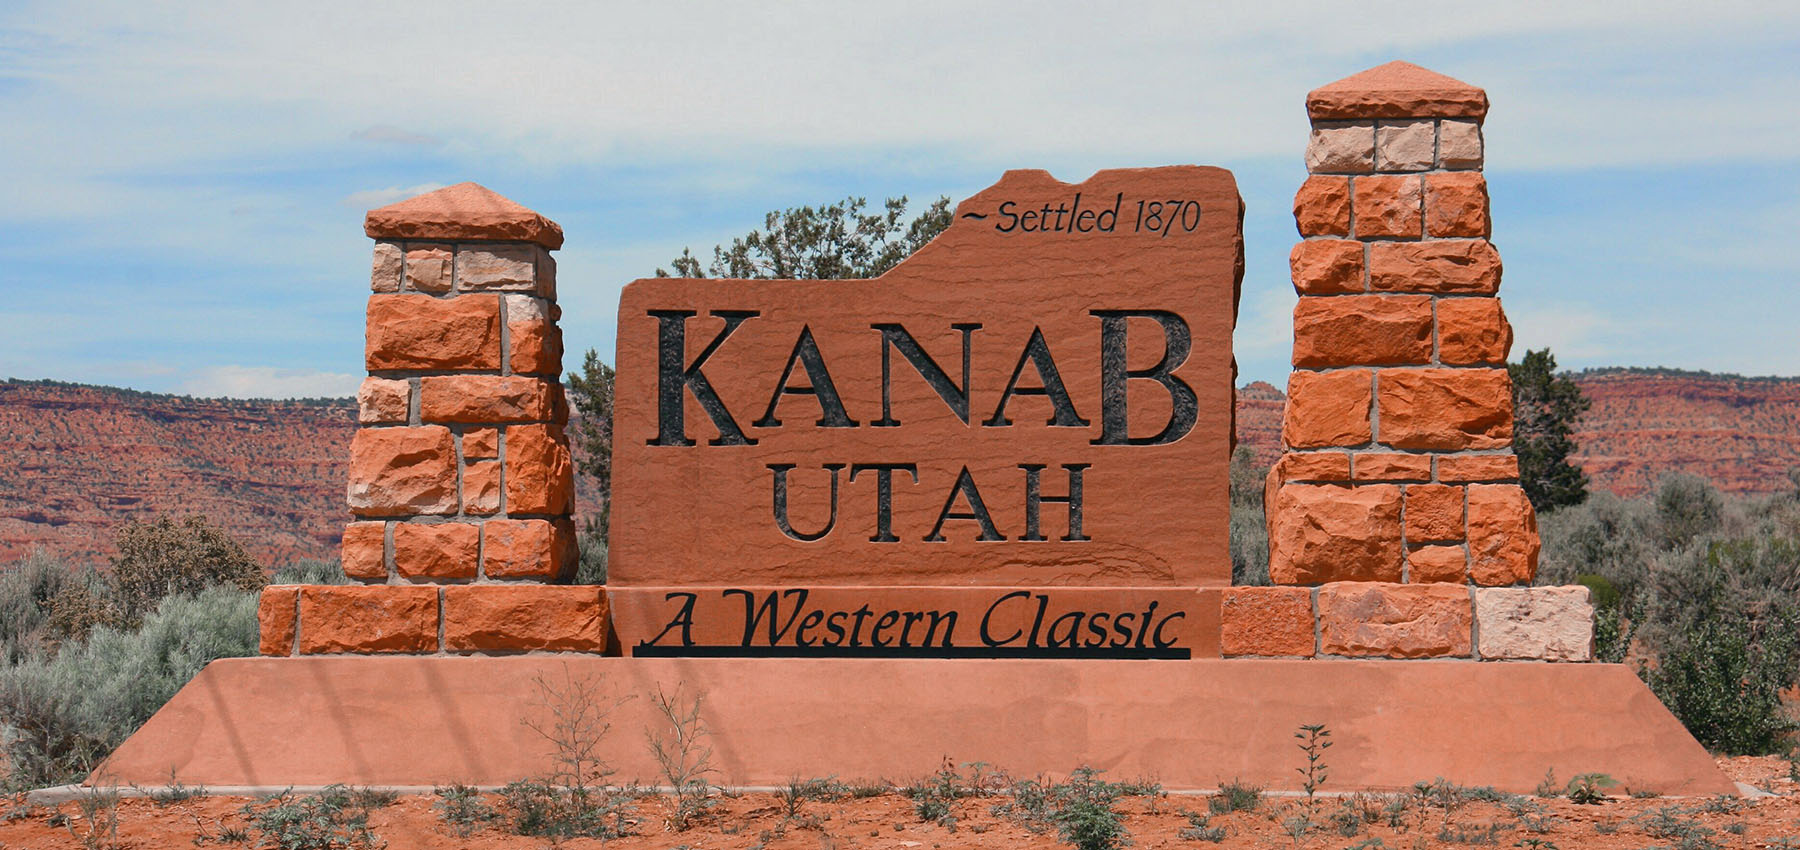 The city of Kanab in Kane County Utah